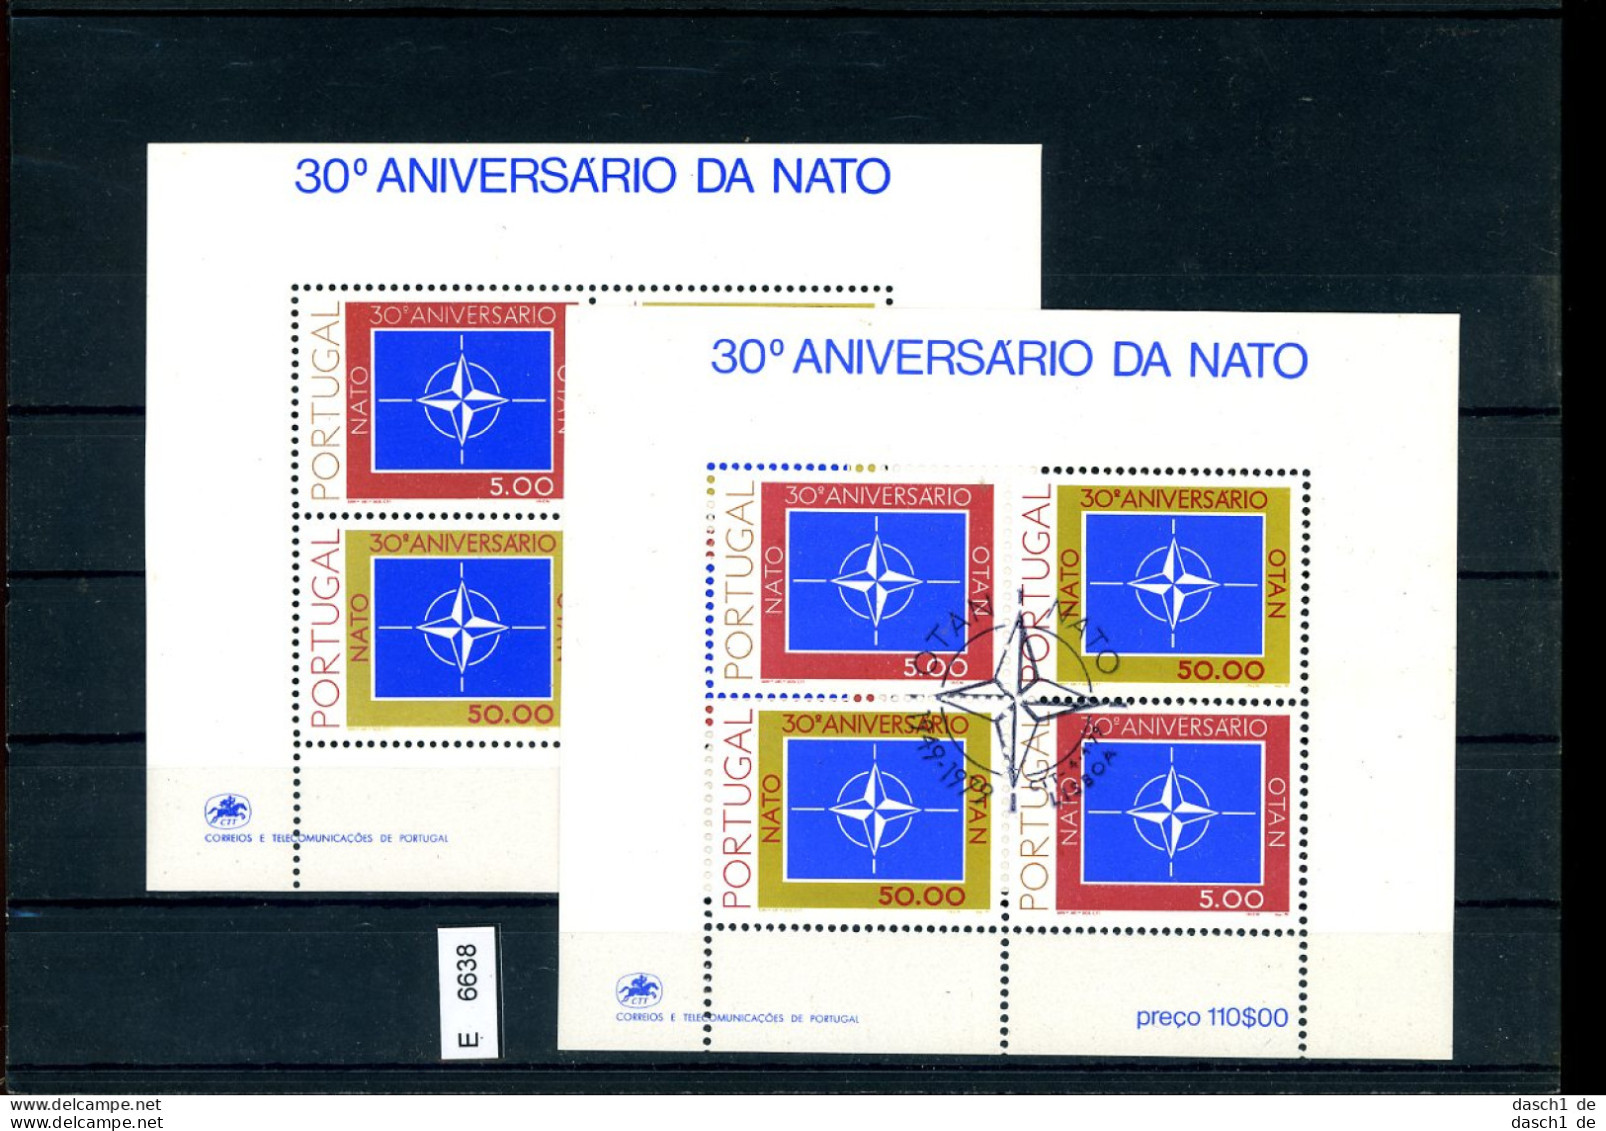 Portugal xx, o, 10 Lose u.a. ATM FDC 1984